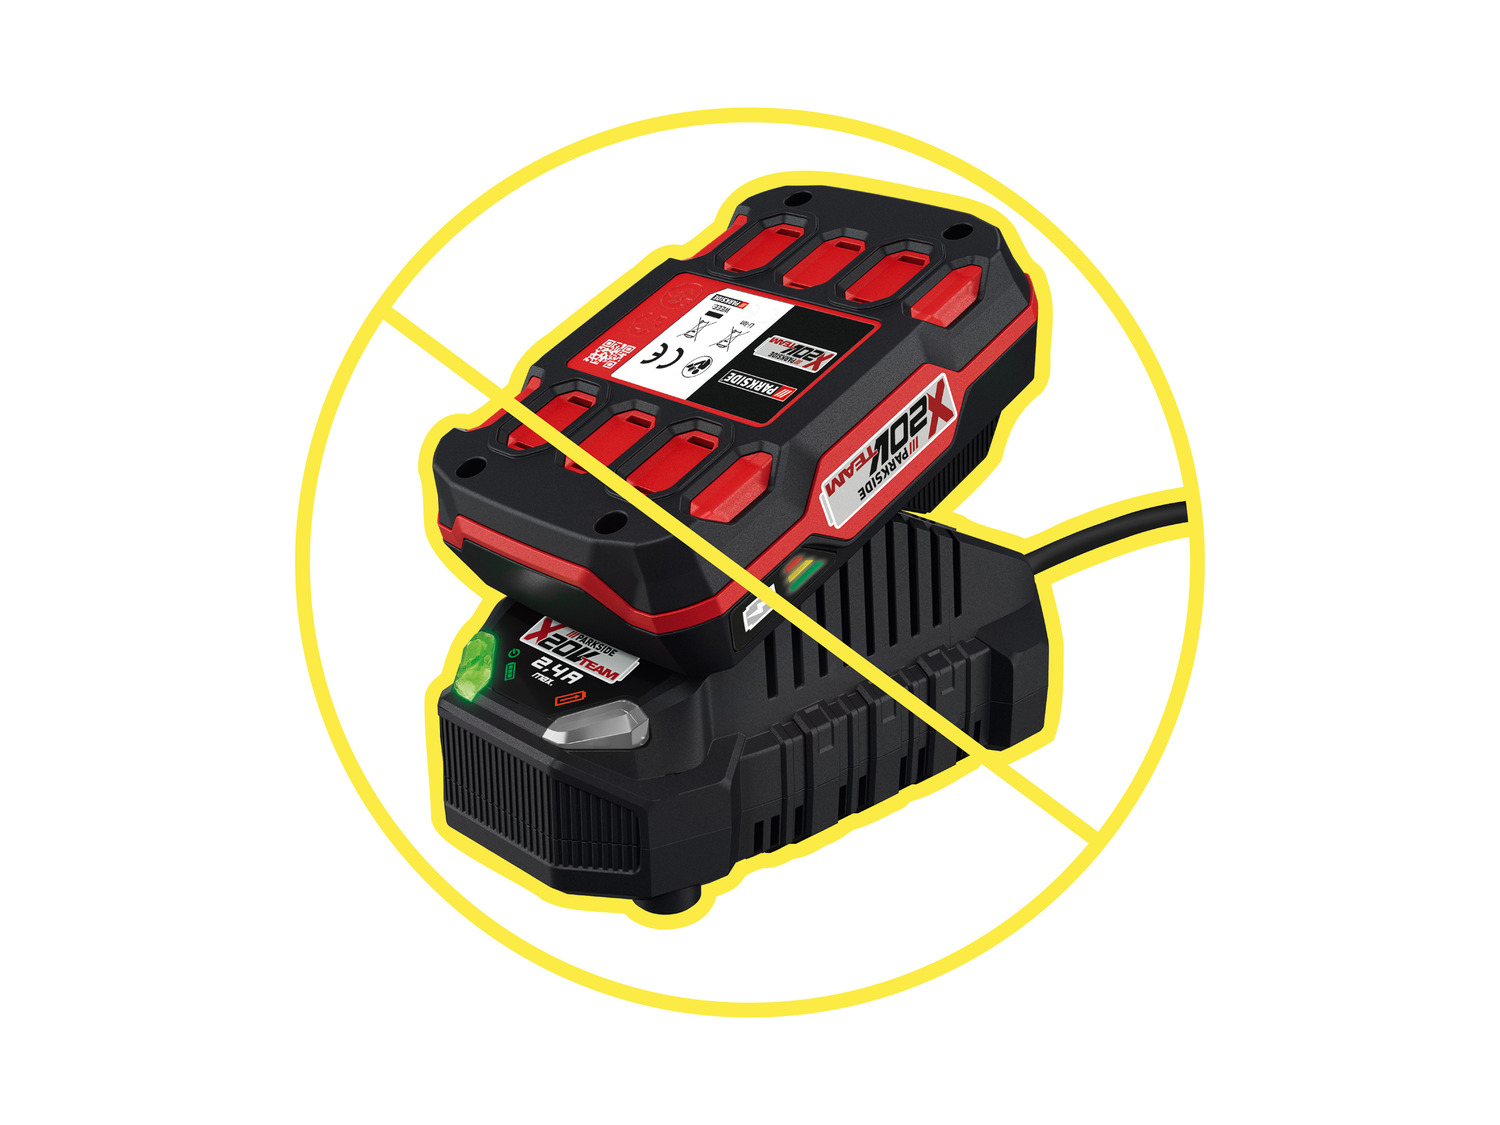 Batterie Lidl Parkside 20V 2A / 4A + outils sans fil : Prix, date…